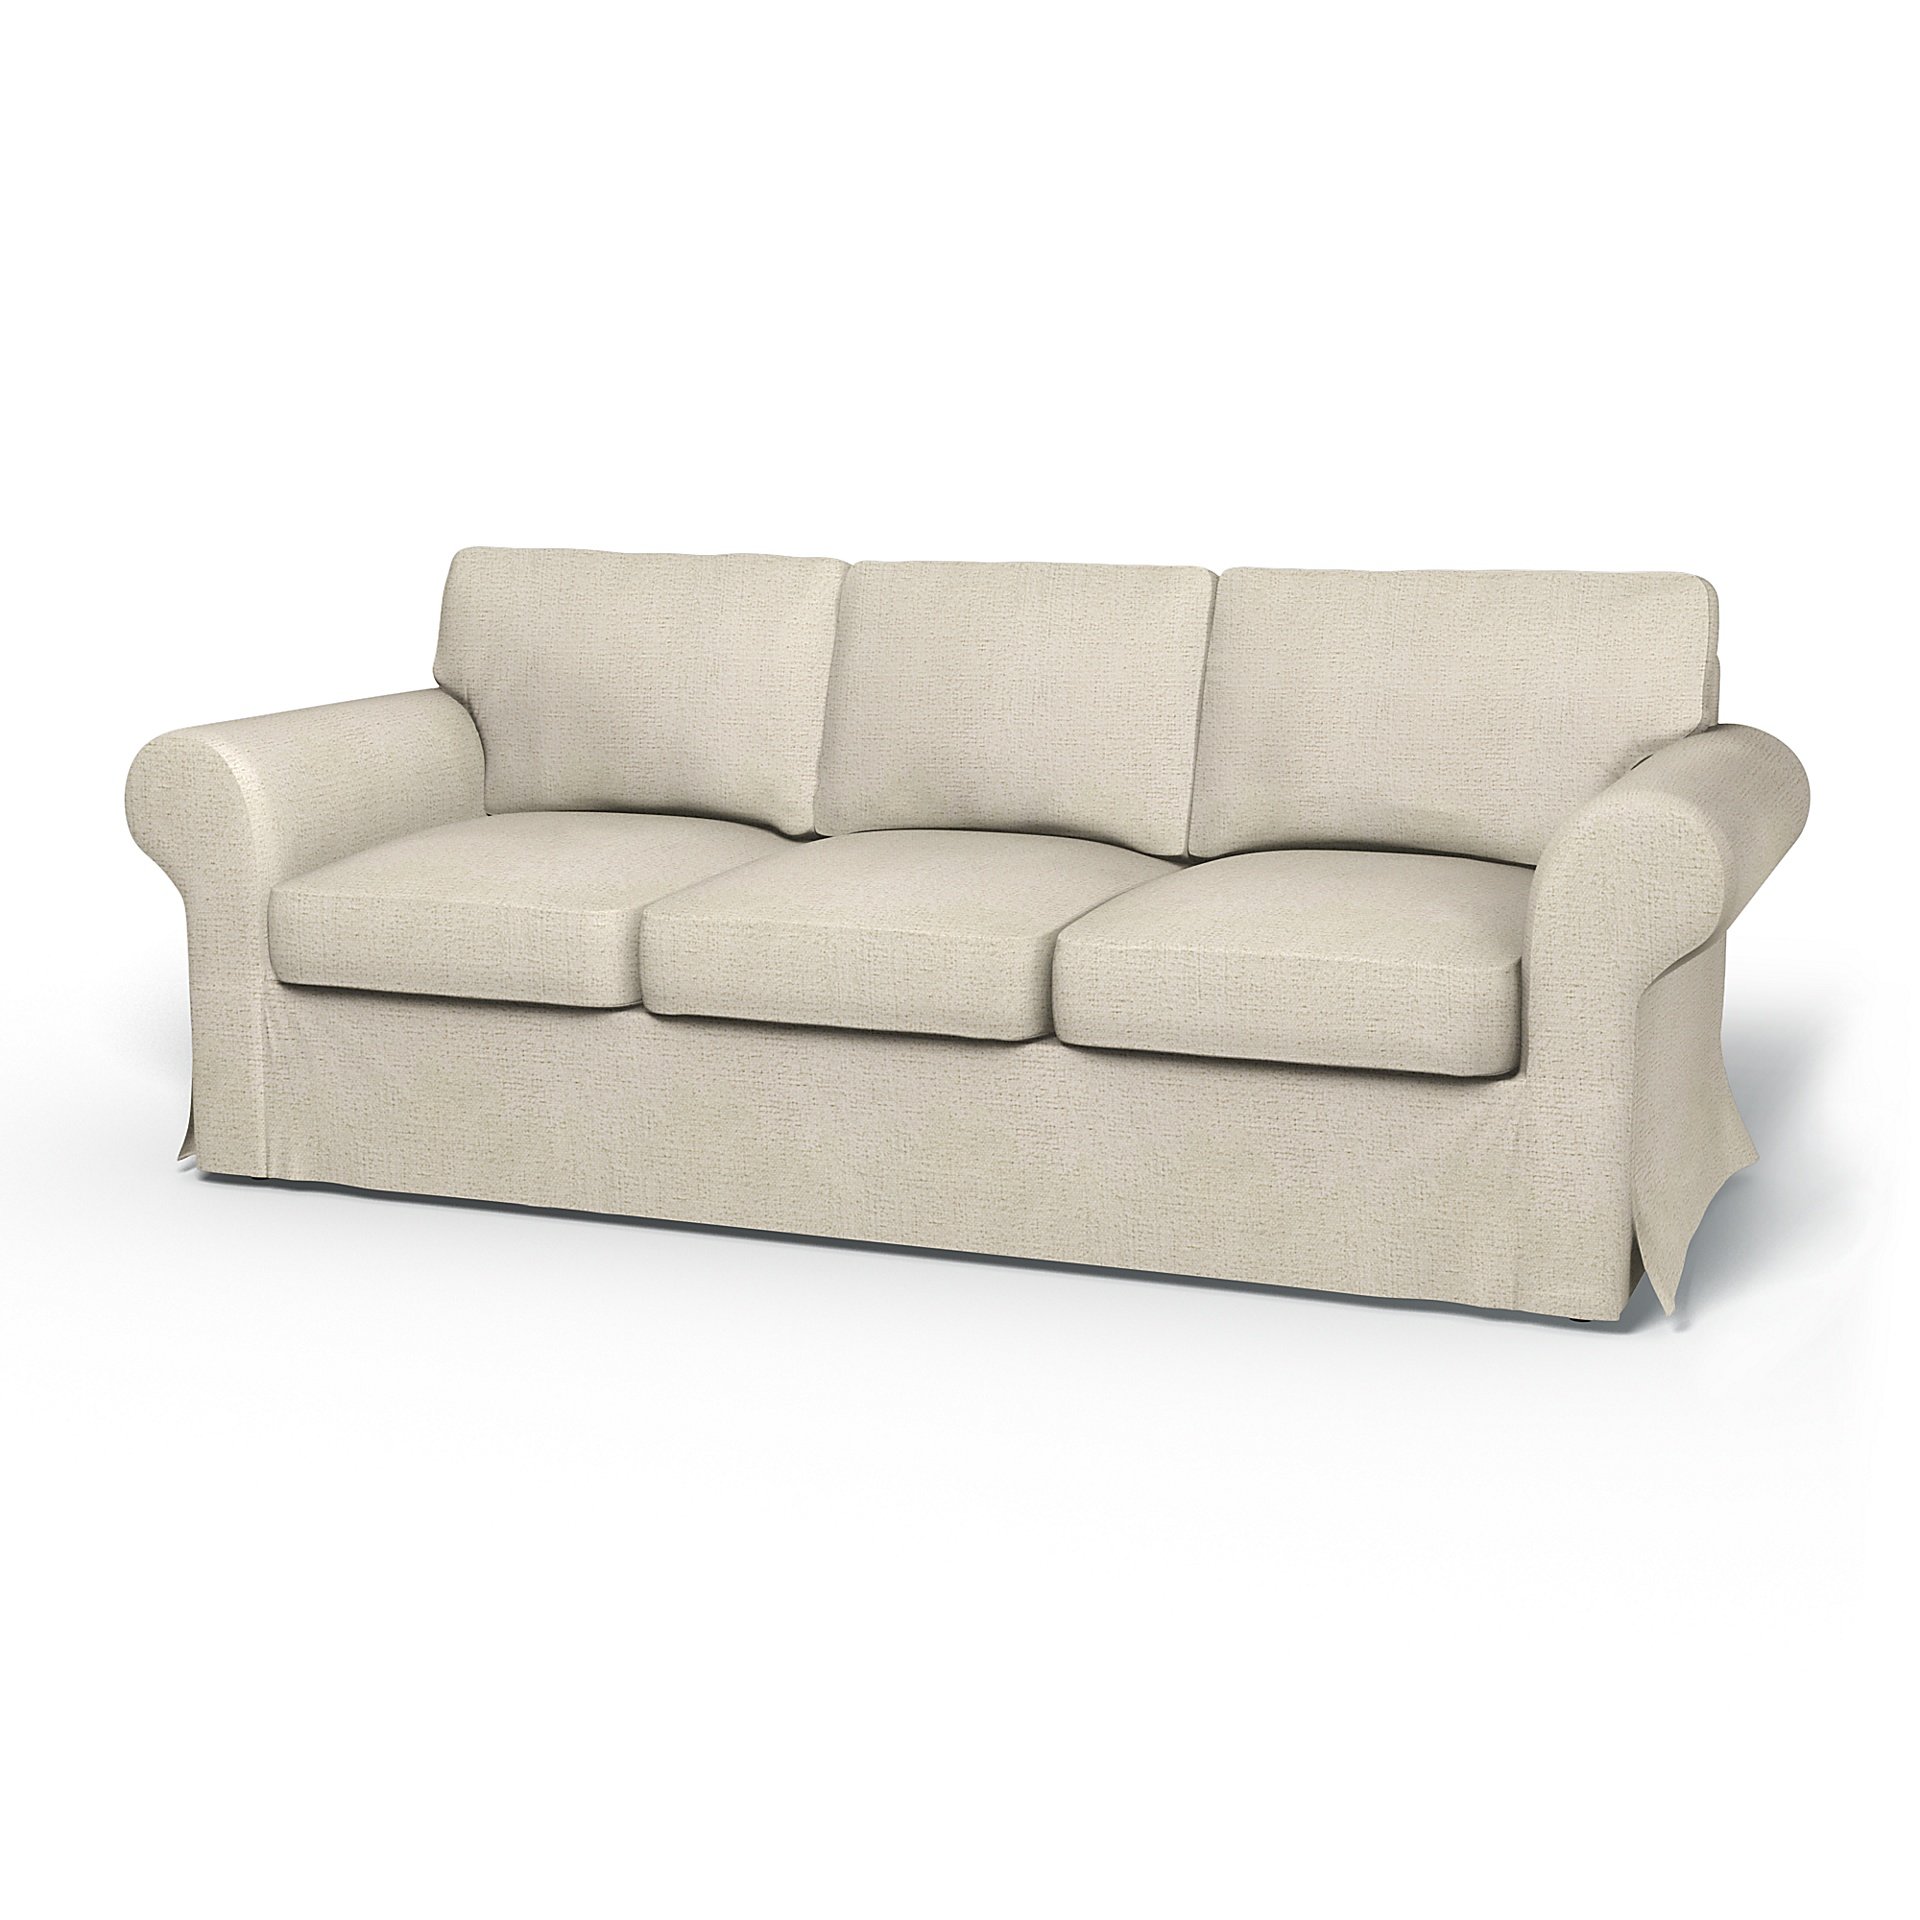 IKEA - Ektorp 3 Seater Sofa Bed Cover, Ecru, Boucle & Texture - Bemz